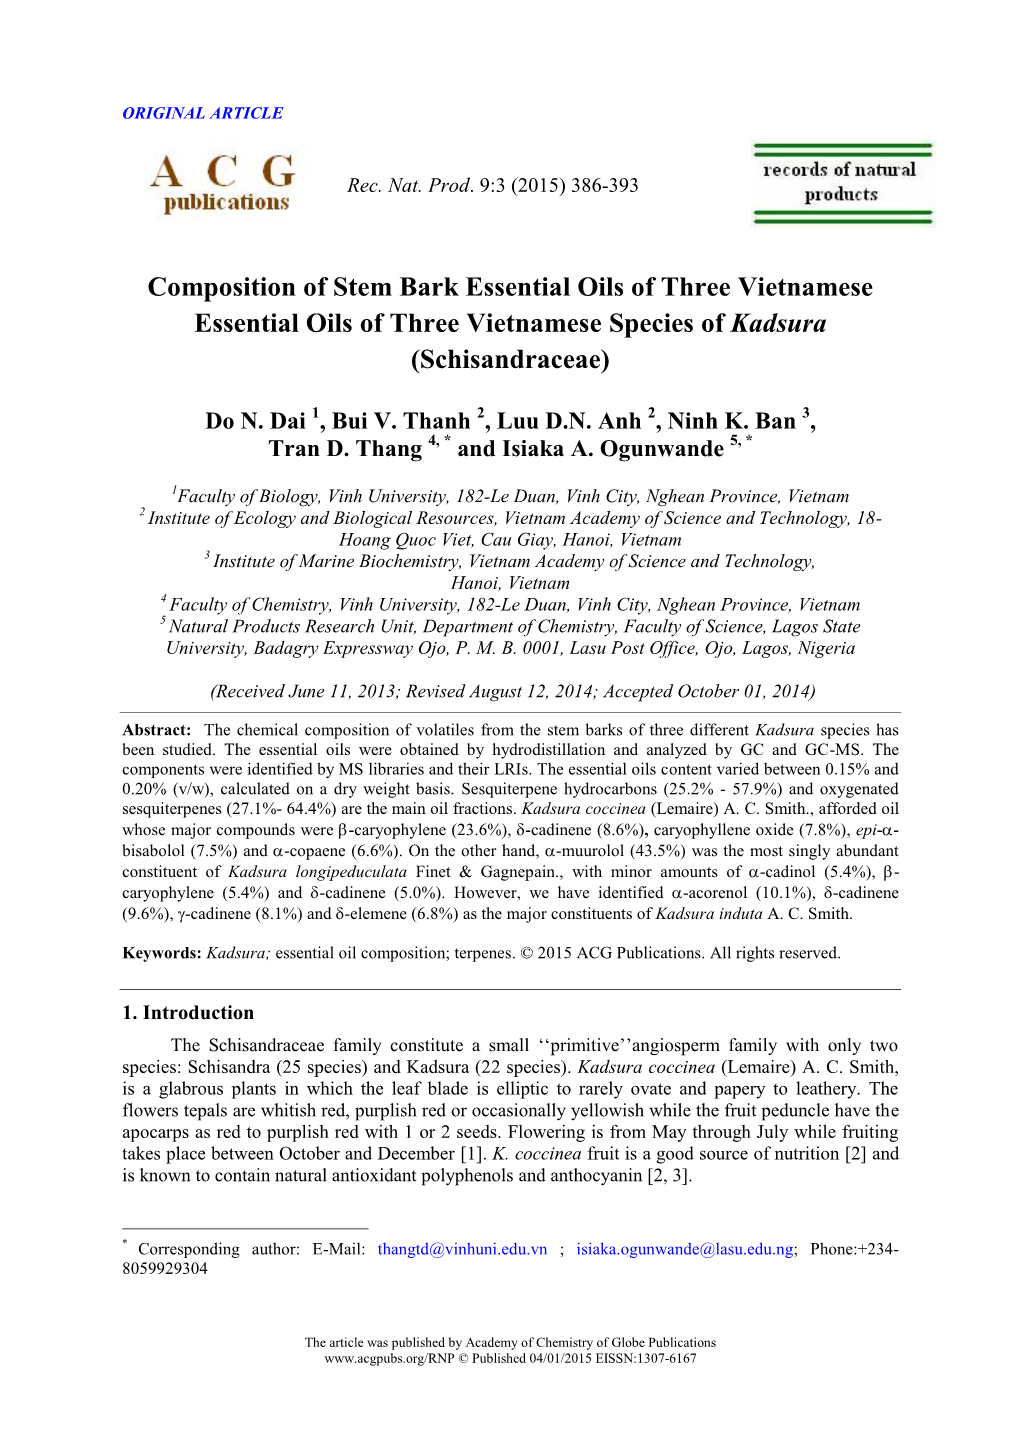 Composition of Stem Bark Essential Oils of Three Vietnamese Essential Oils of Three Vietnamese Species of Kadsura (Schisandraceae)